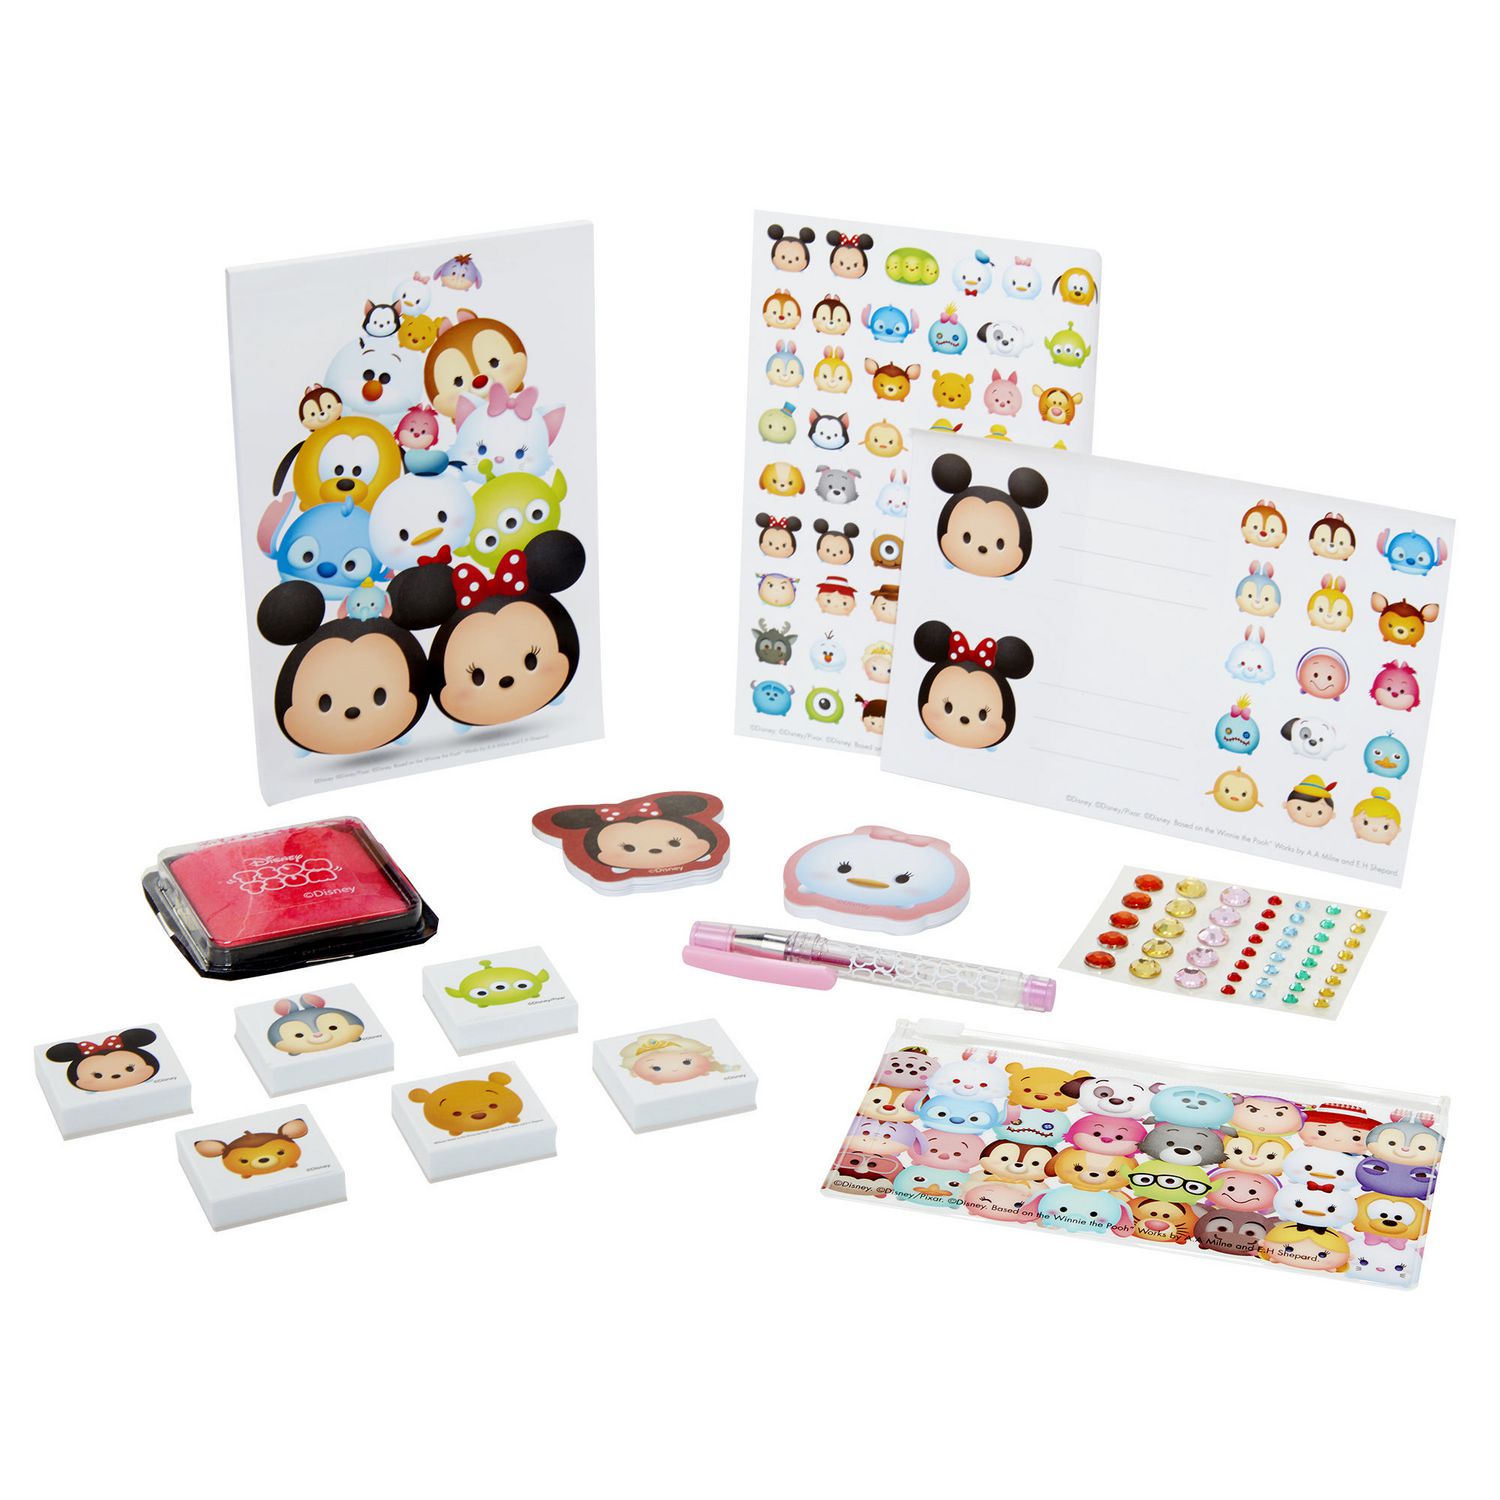 Ultimate Sticker Collection: Disney Tsum Tsum